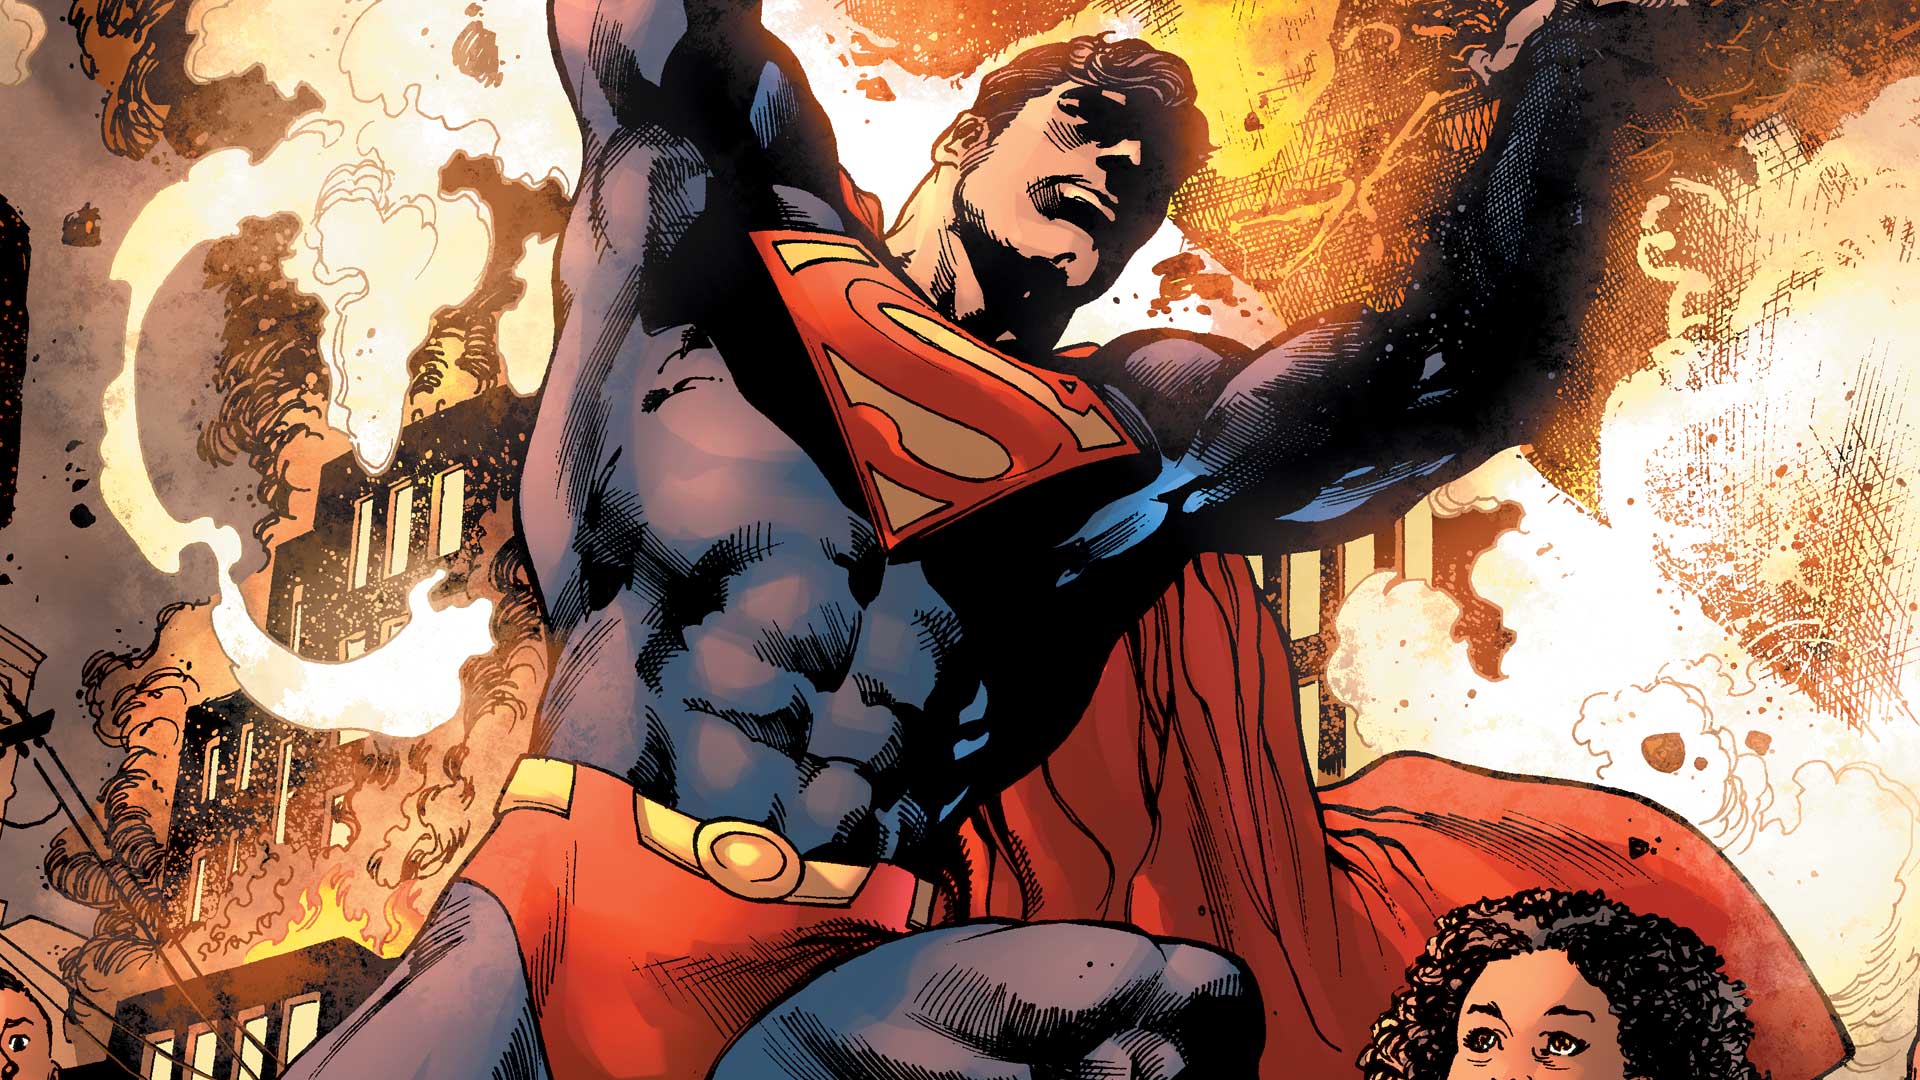 Trade Report On James Gunn’s Superman Movie Seemingly Debunked – Again!